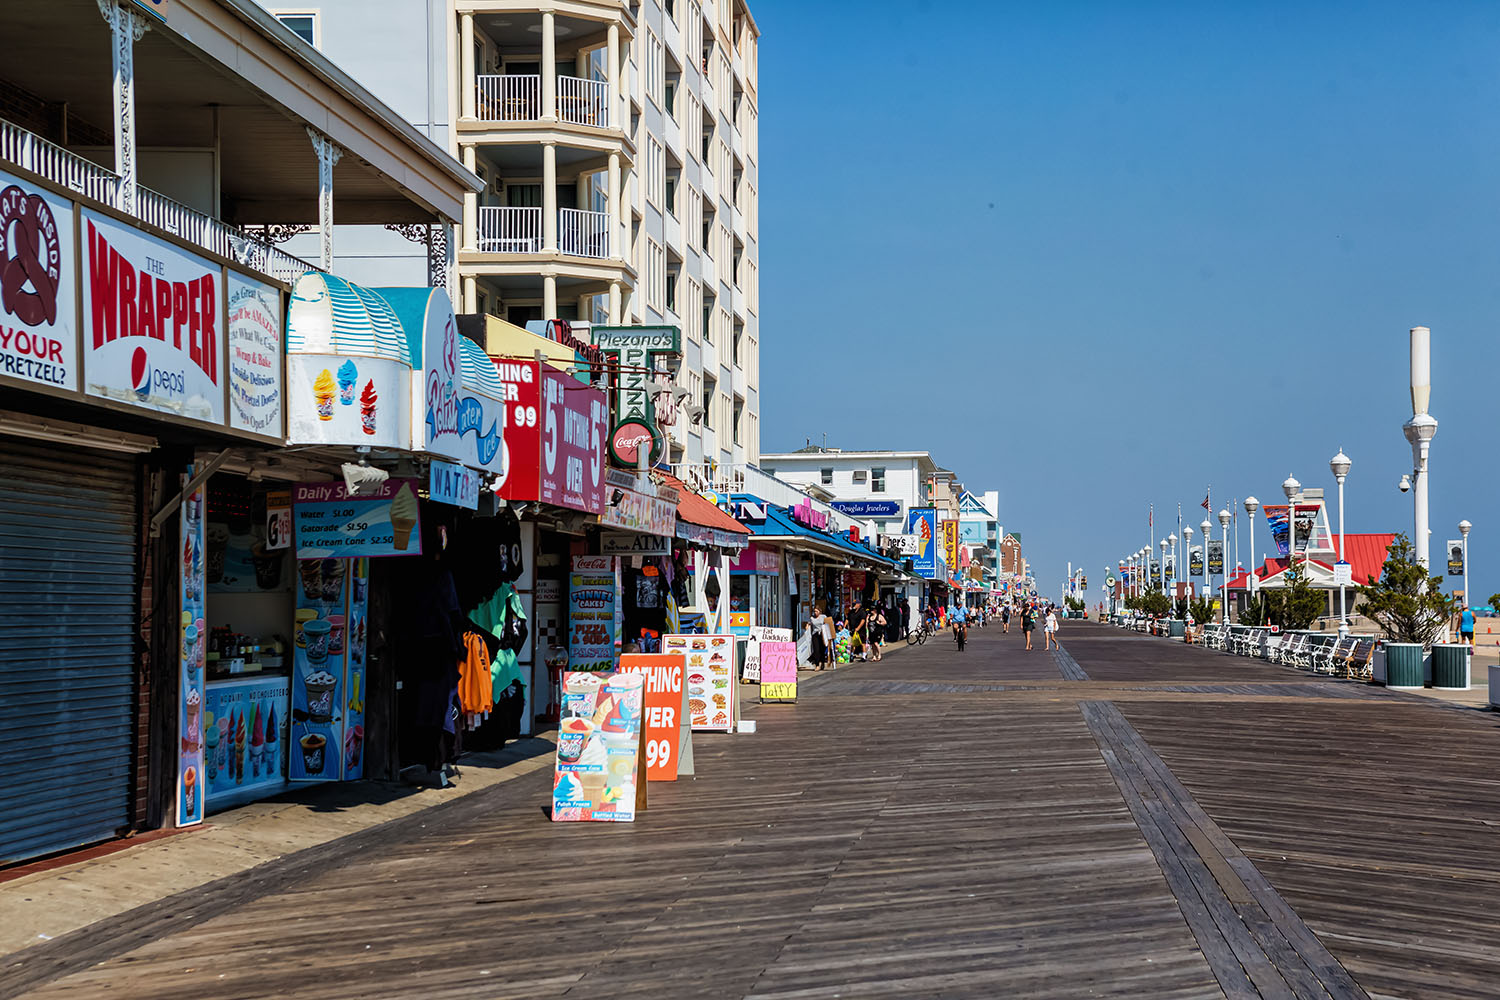 10/30/2019 Major Boardwalk Replacement Project Looming In Ocean City